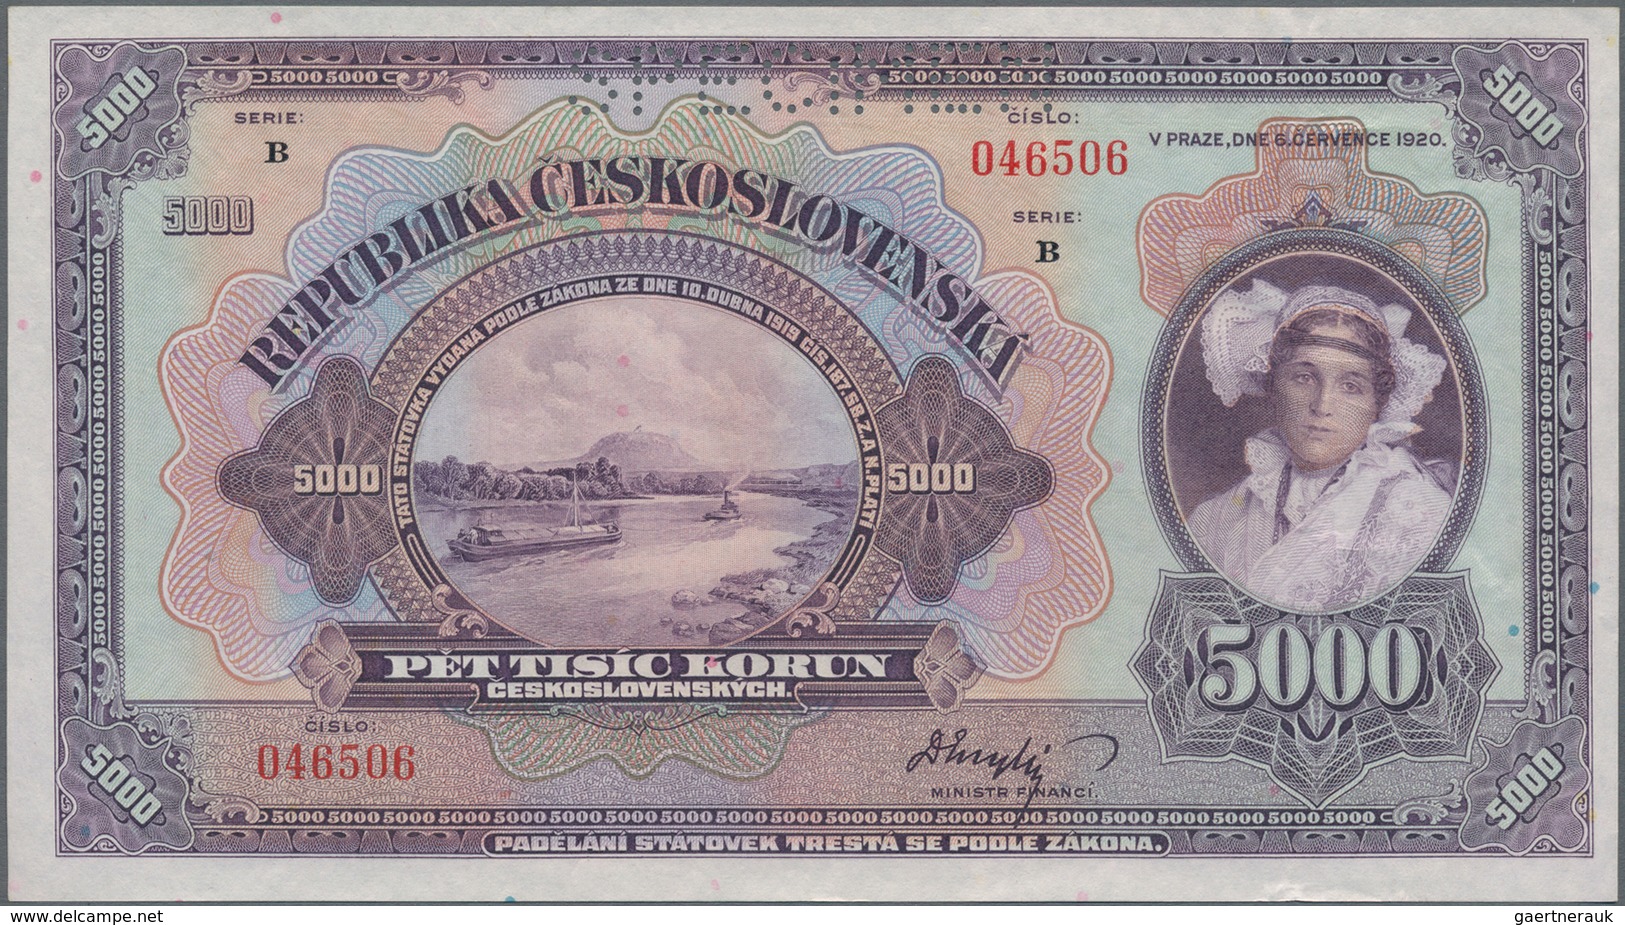 Czechoslovakia / Tschechoslowakei: Set with 4 Specimen notes containing Republika Československá 500